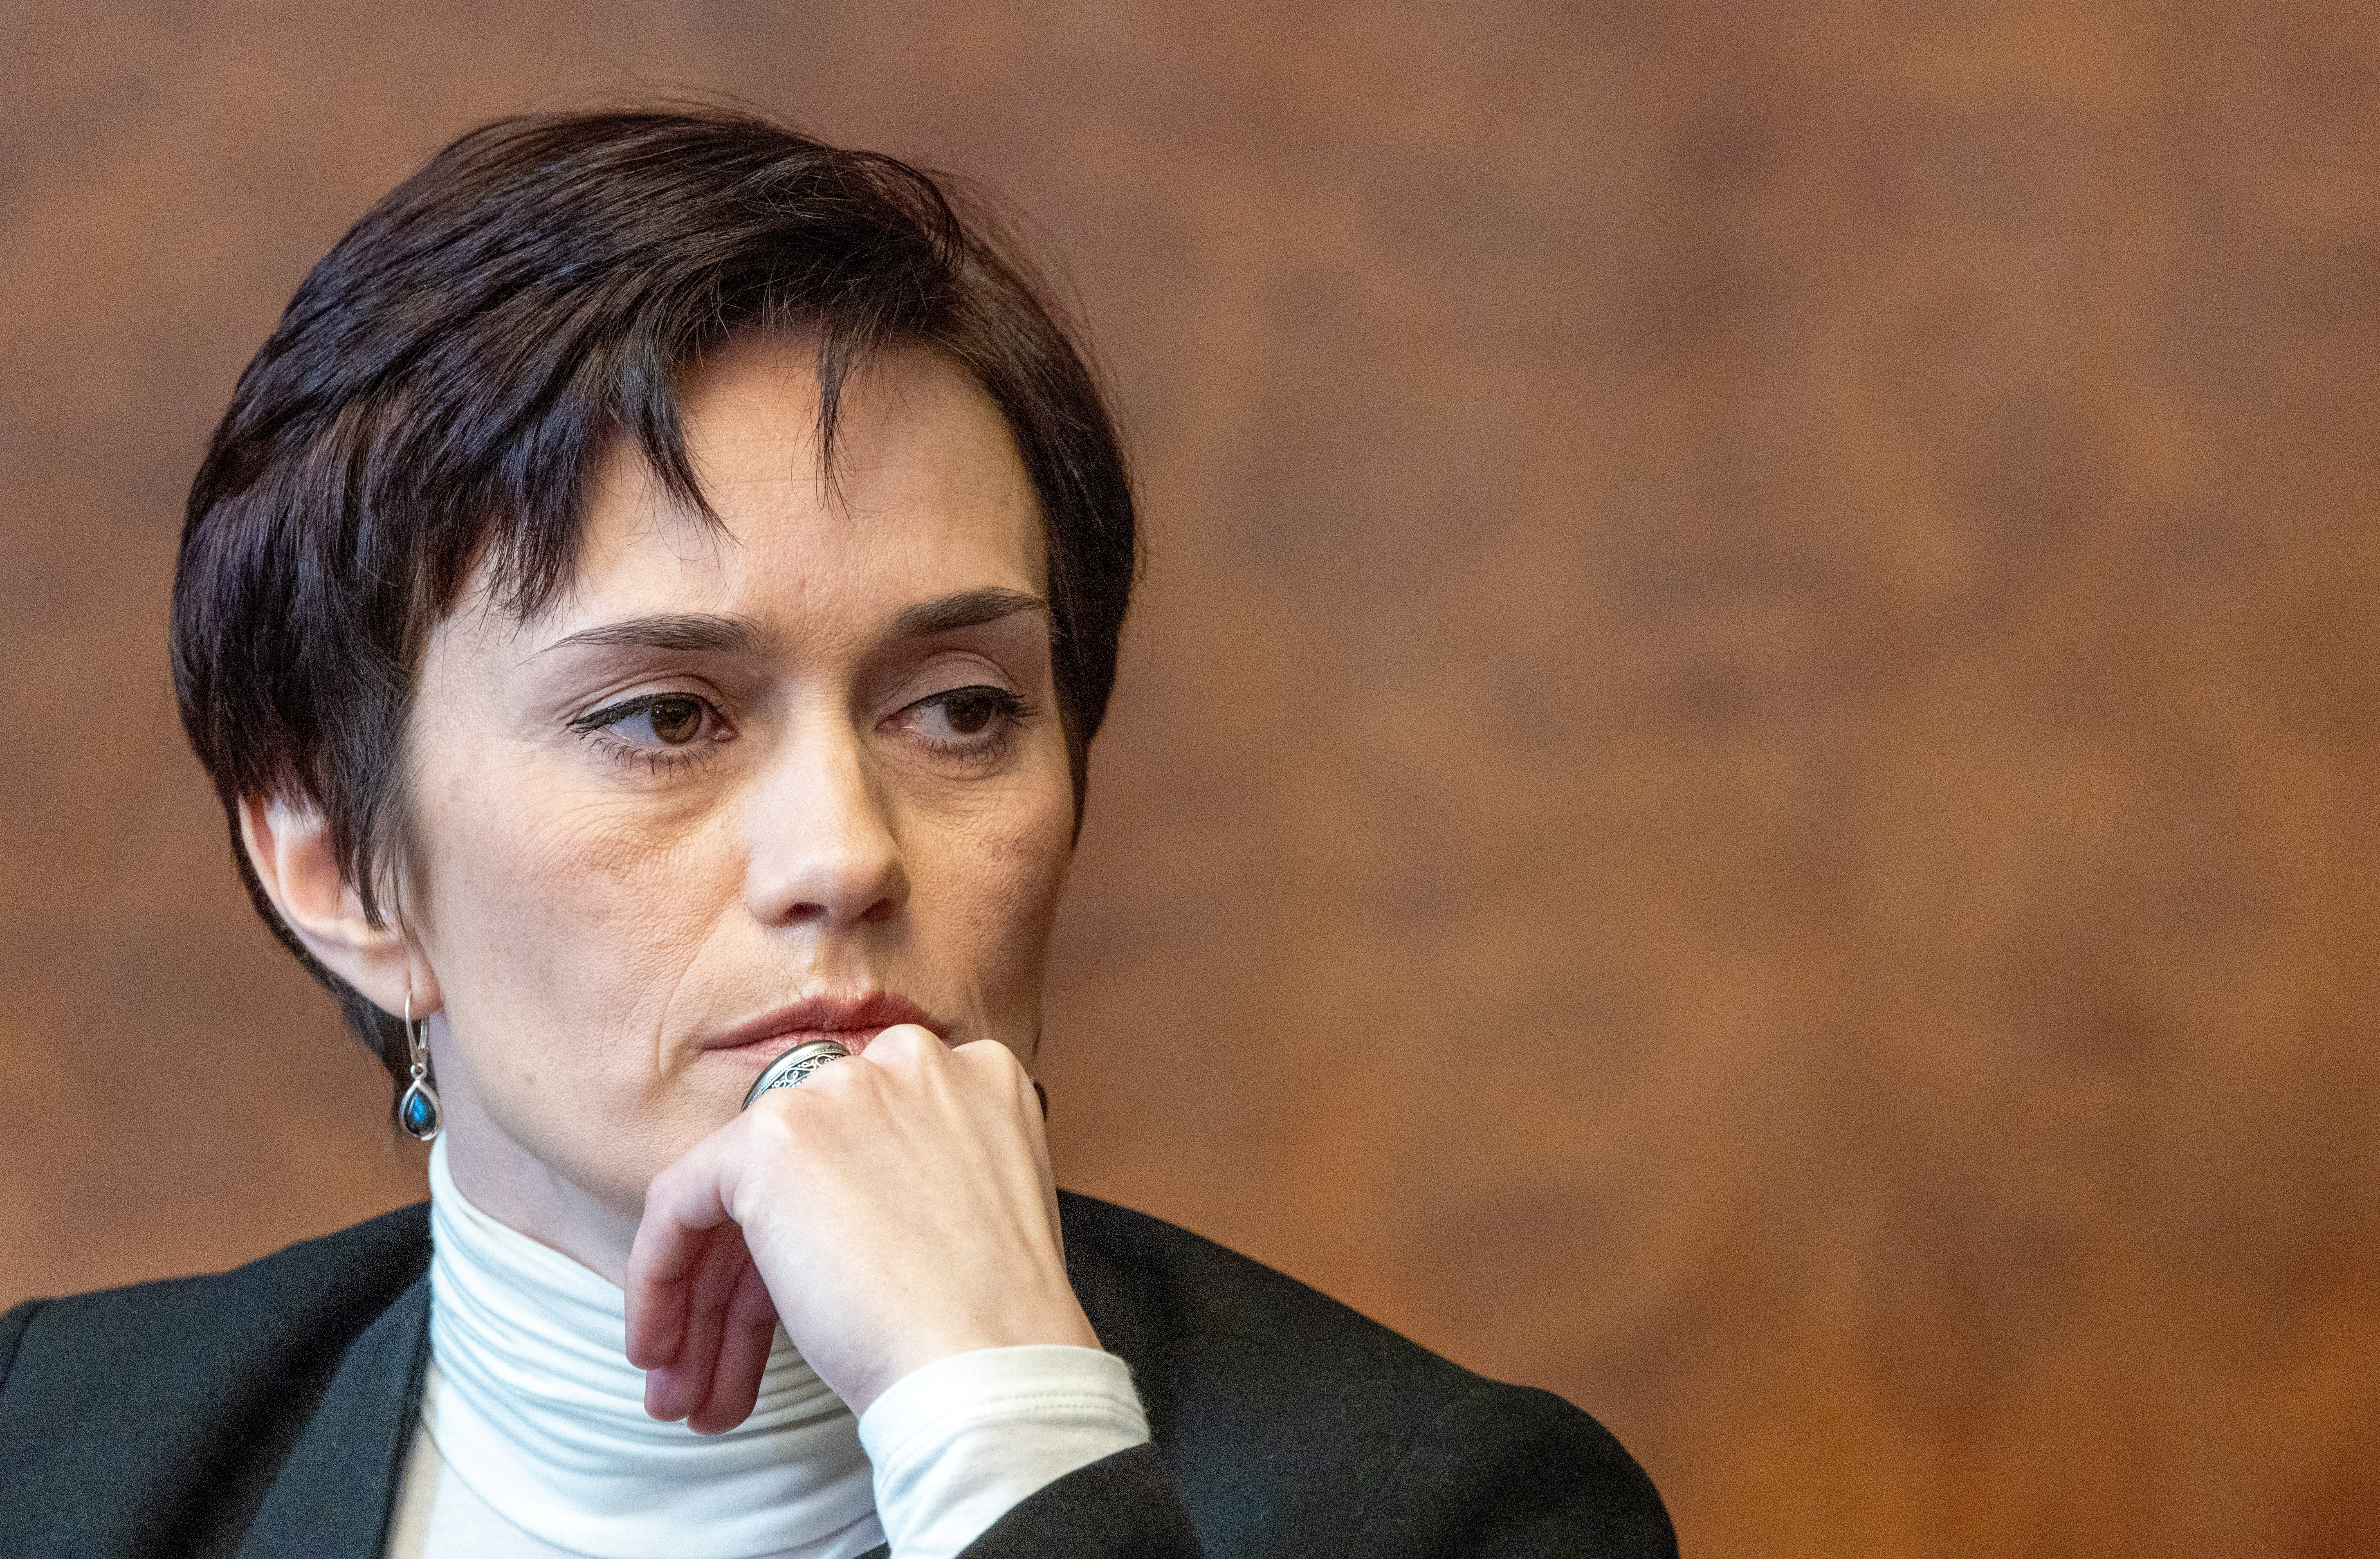 Human rights activist and wife of prisoner Vladimir Kara-Murza, Evgenia Kara-Murza attends an ACANU briefing in Geneva